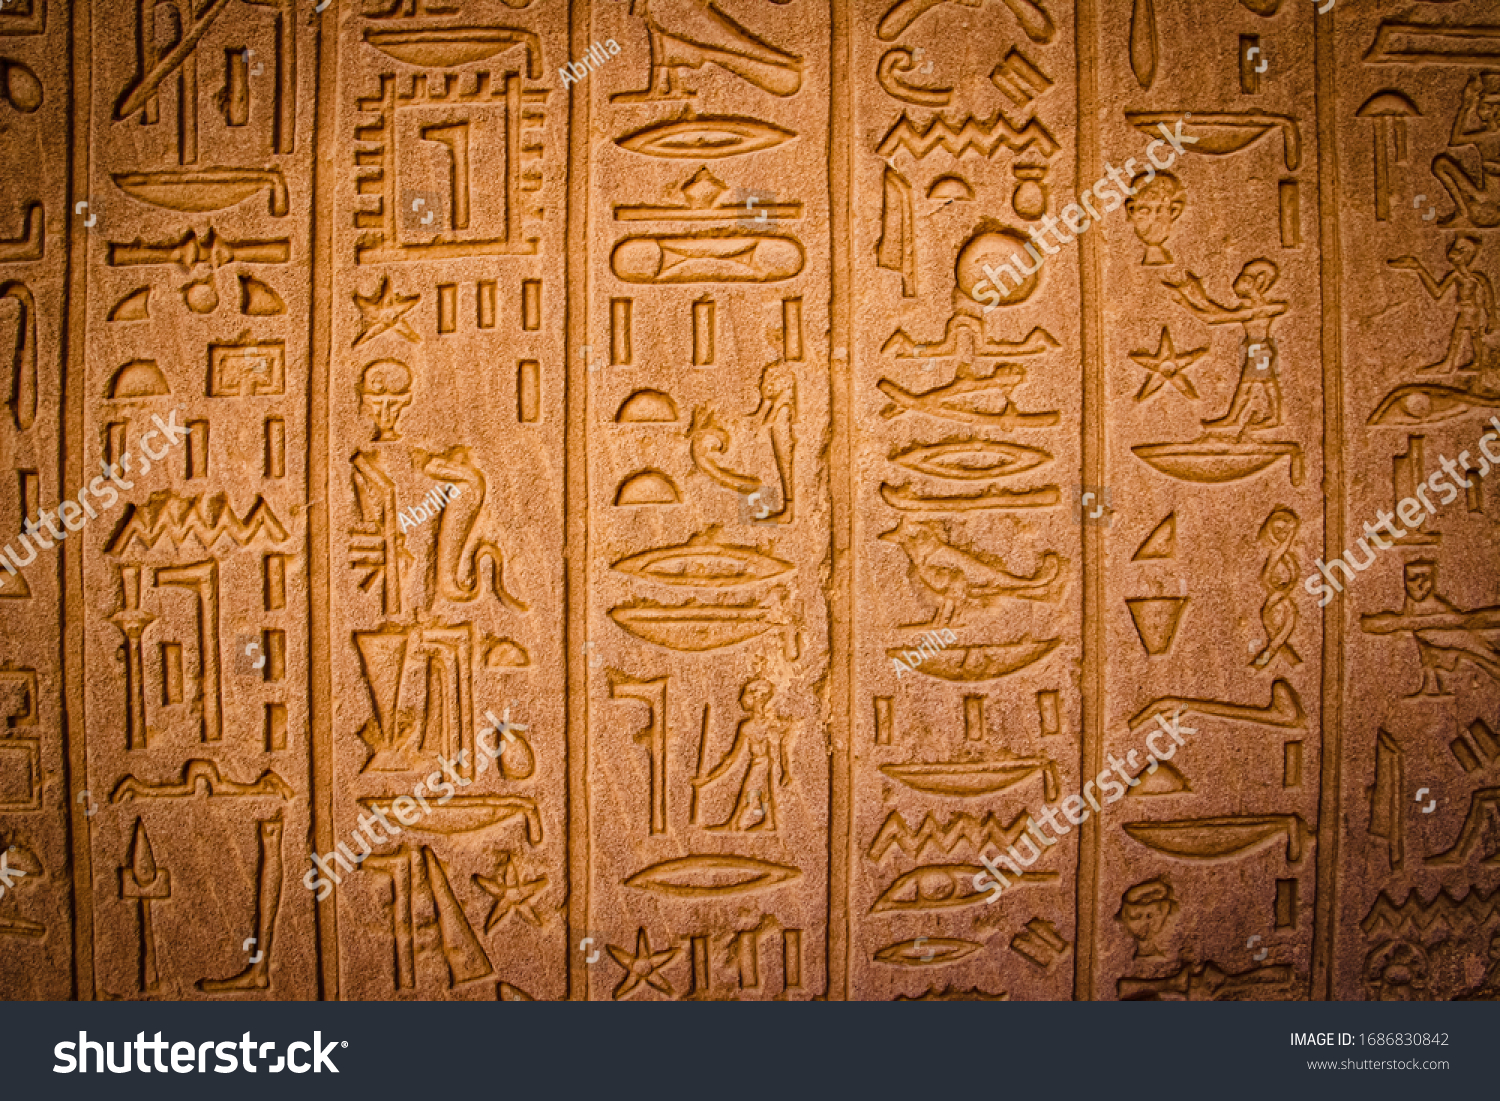 Ancient Egyptian writing, Egyptian hieroglyphs, wall inscriptions #1686830842